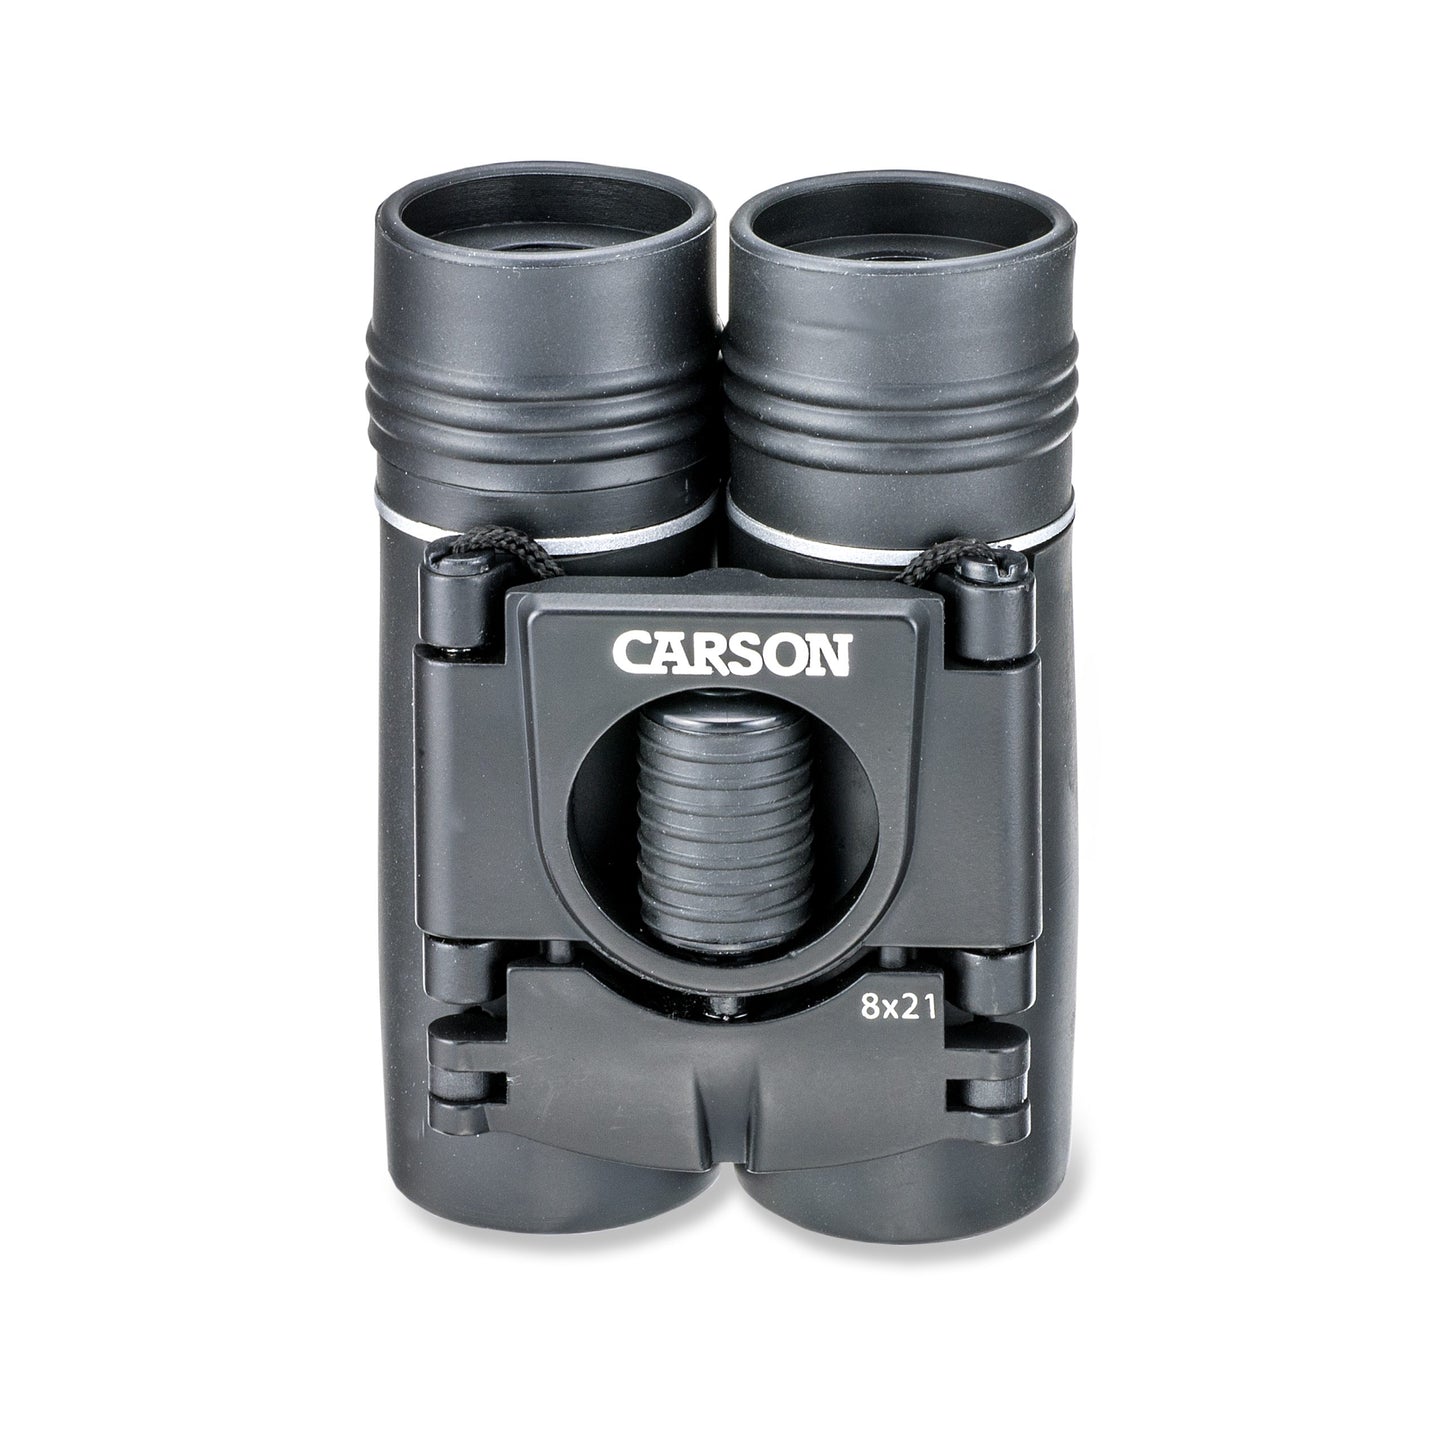 Carson Kinglet 8x21mm Ultra-Compact Lightweight Binoculars KB-821